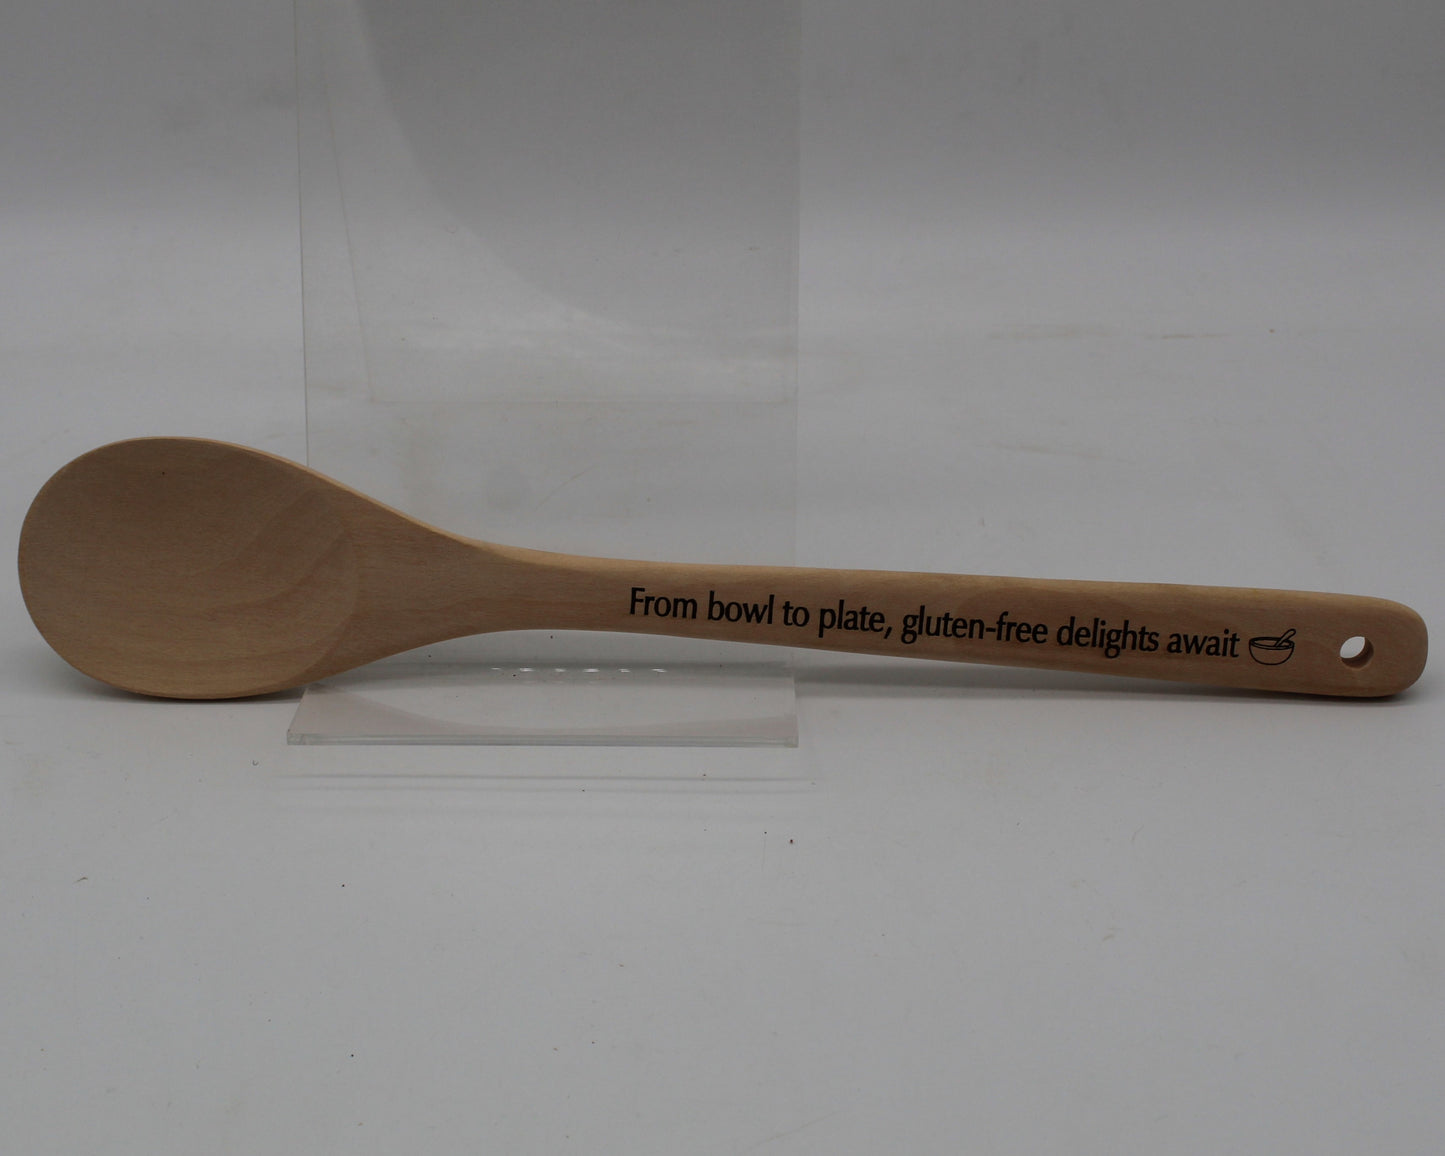 Wooden Spoon Engraved Gluten Free - Haisley Design